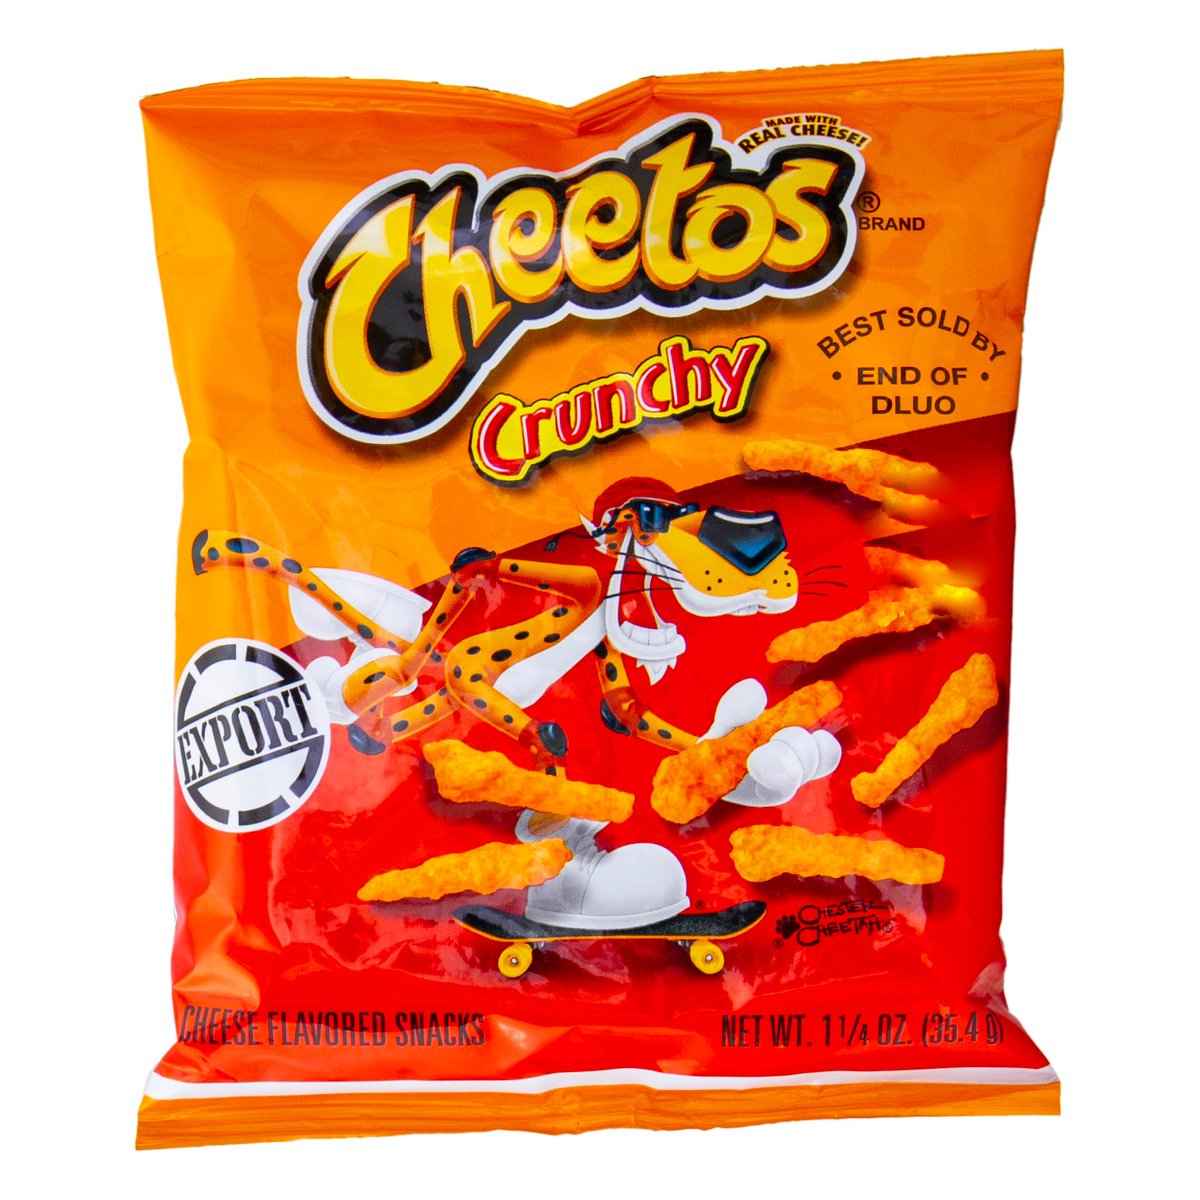 Cheetos Crunchy Cheese Flavored Snacks, 35.4 g